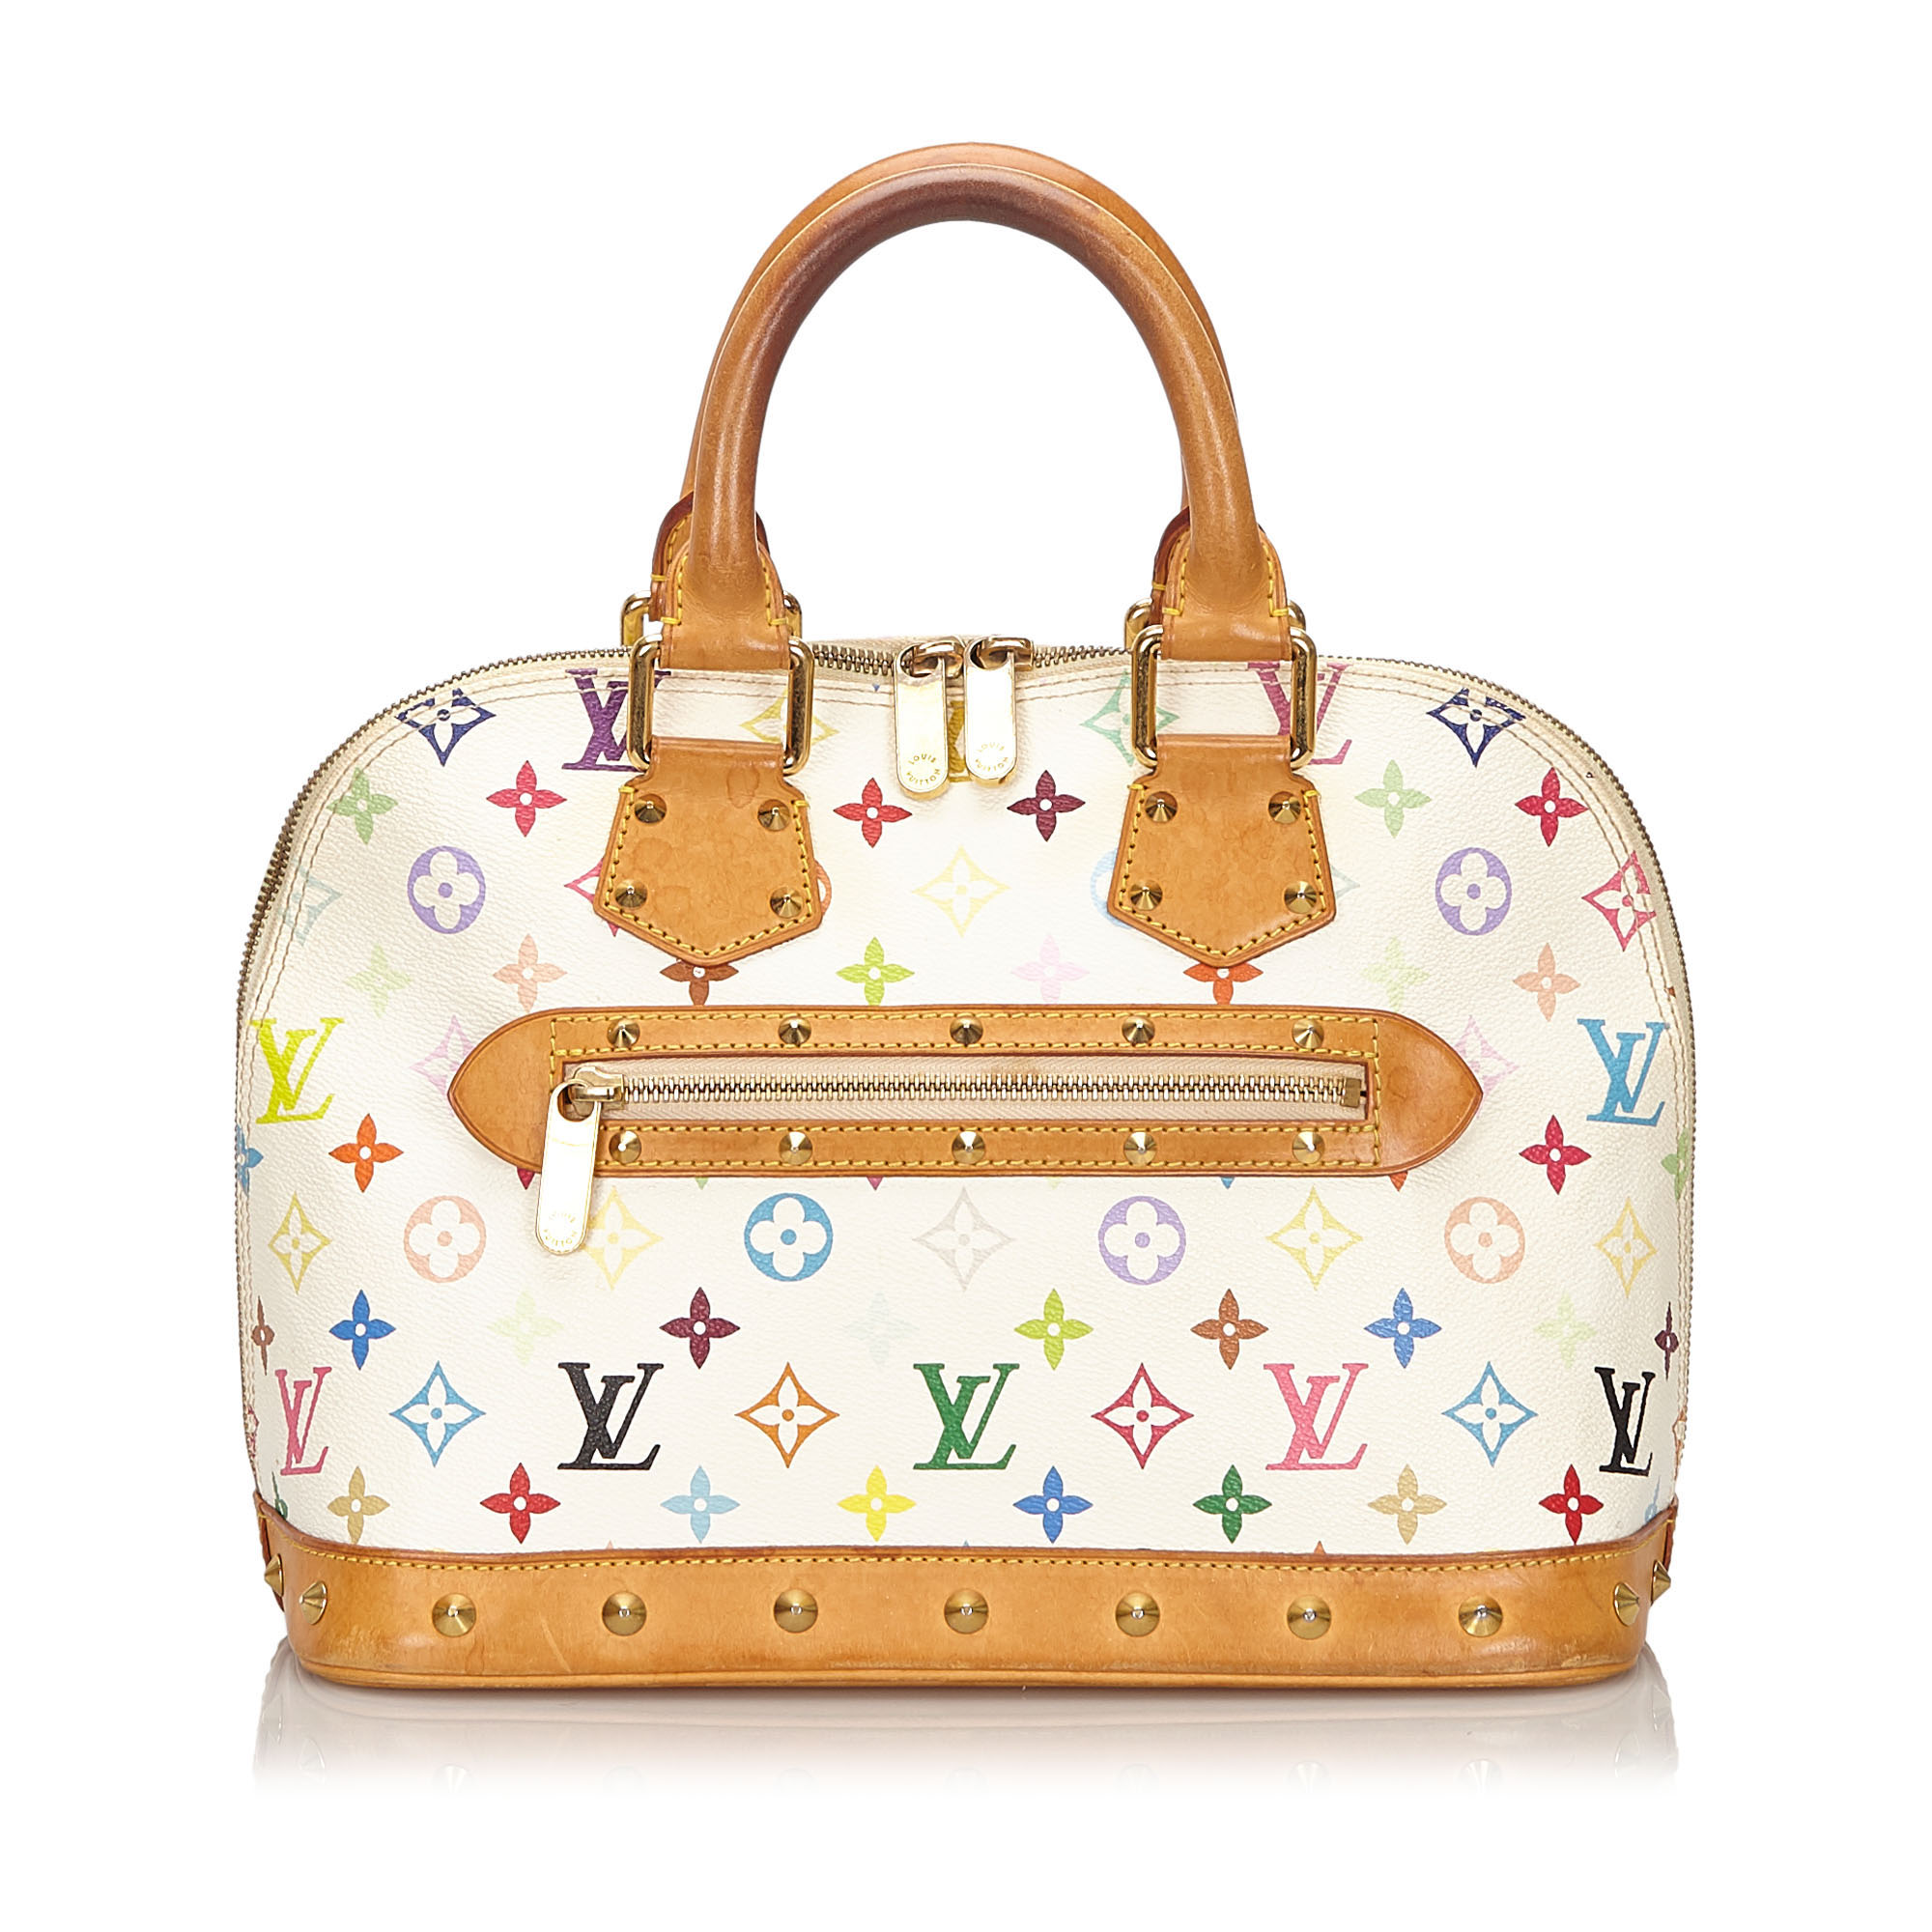 Louis Vuitton Monogram Multicolore Alma PM Handbag, the Alma PM features the Monogram Multicolore